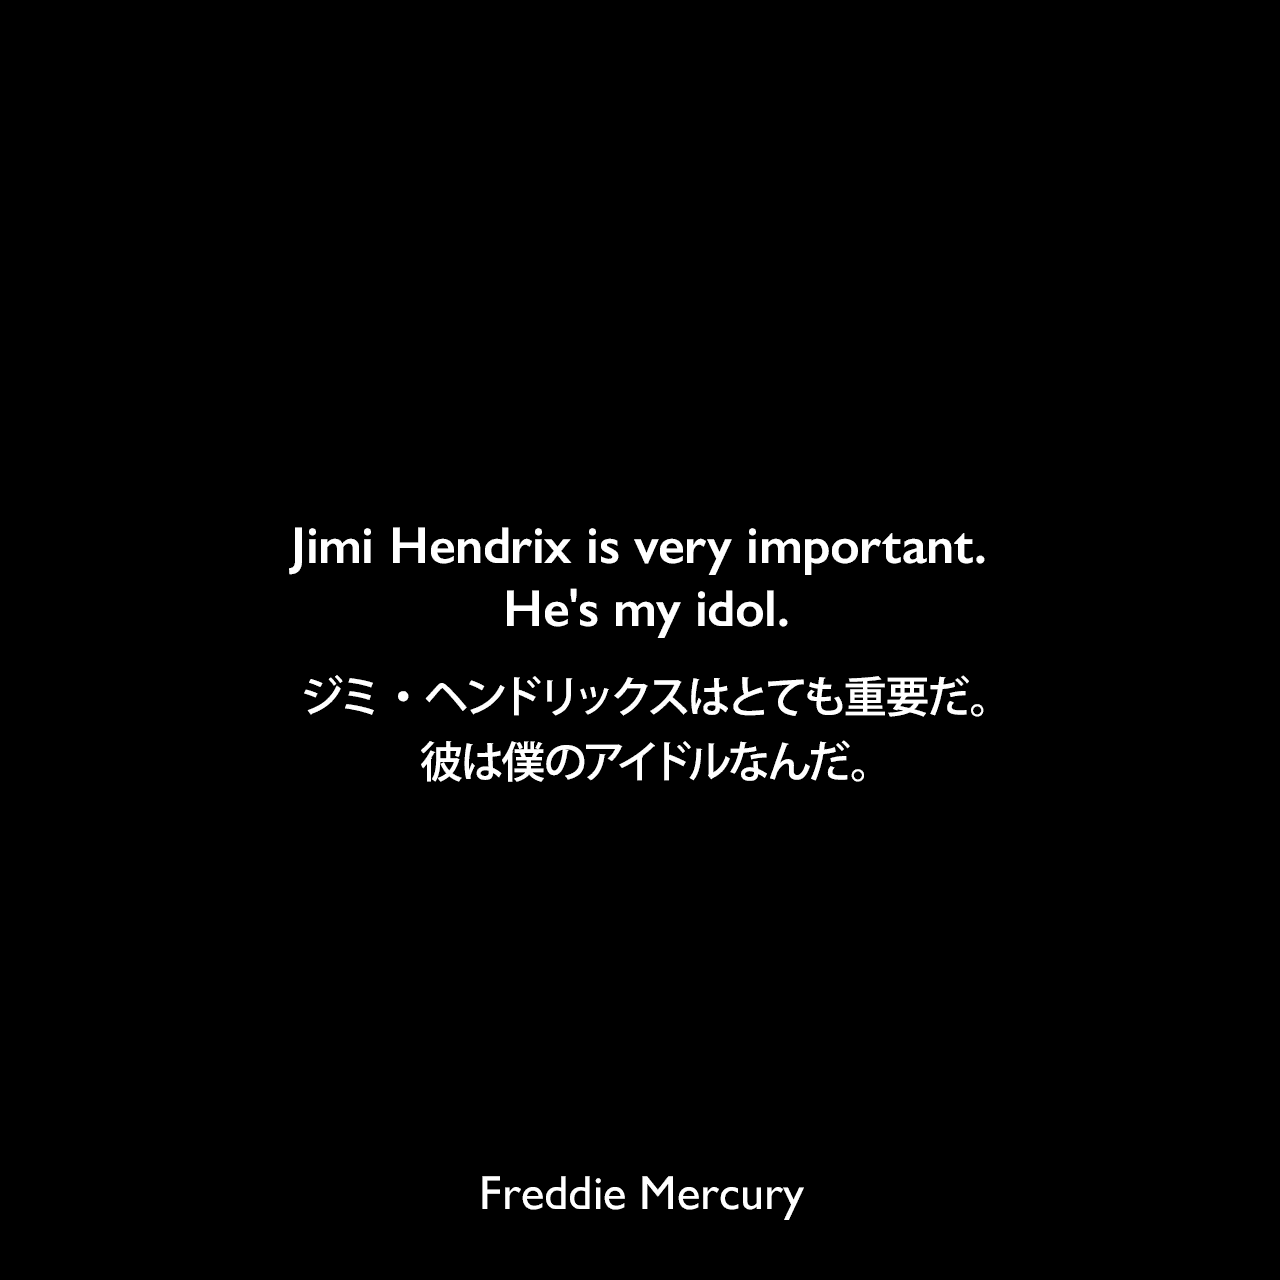 Jimi Hendrix is very important. He's my idol.ジミ・ヘンドリックスはとても重要だ。彼は僕のアイドルなんだ。- 1975年4月 ロック専門雑誌「サーカス」よりFreddie Mercury